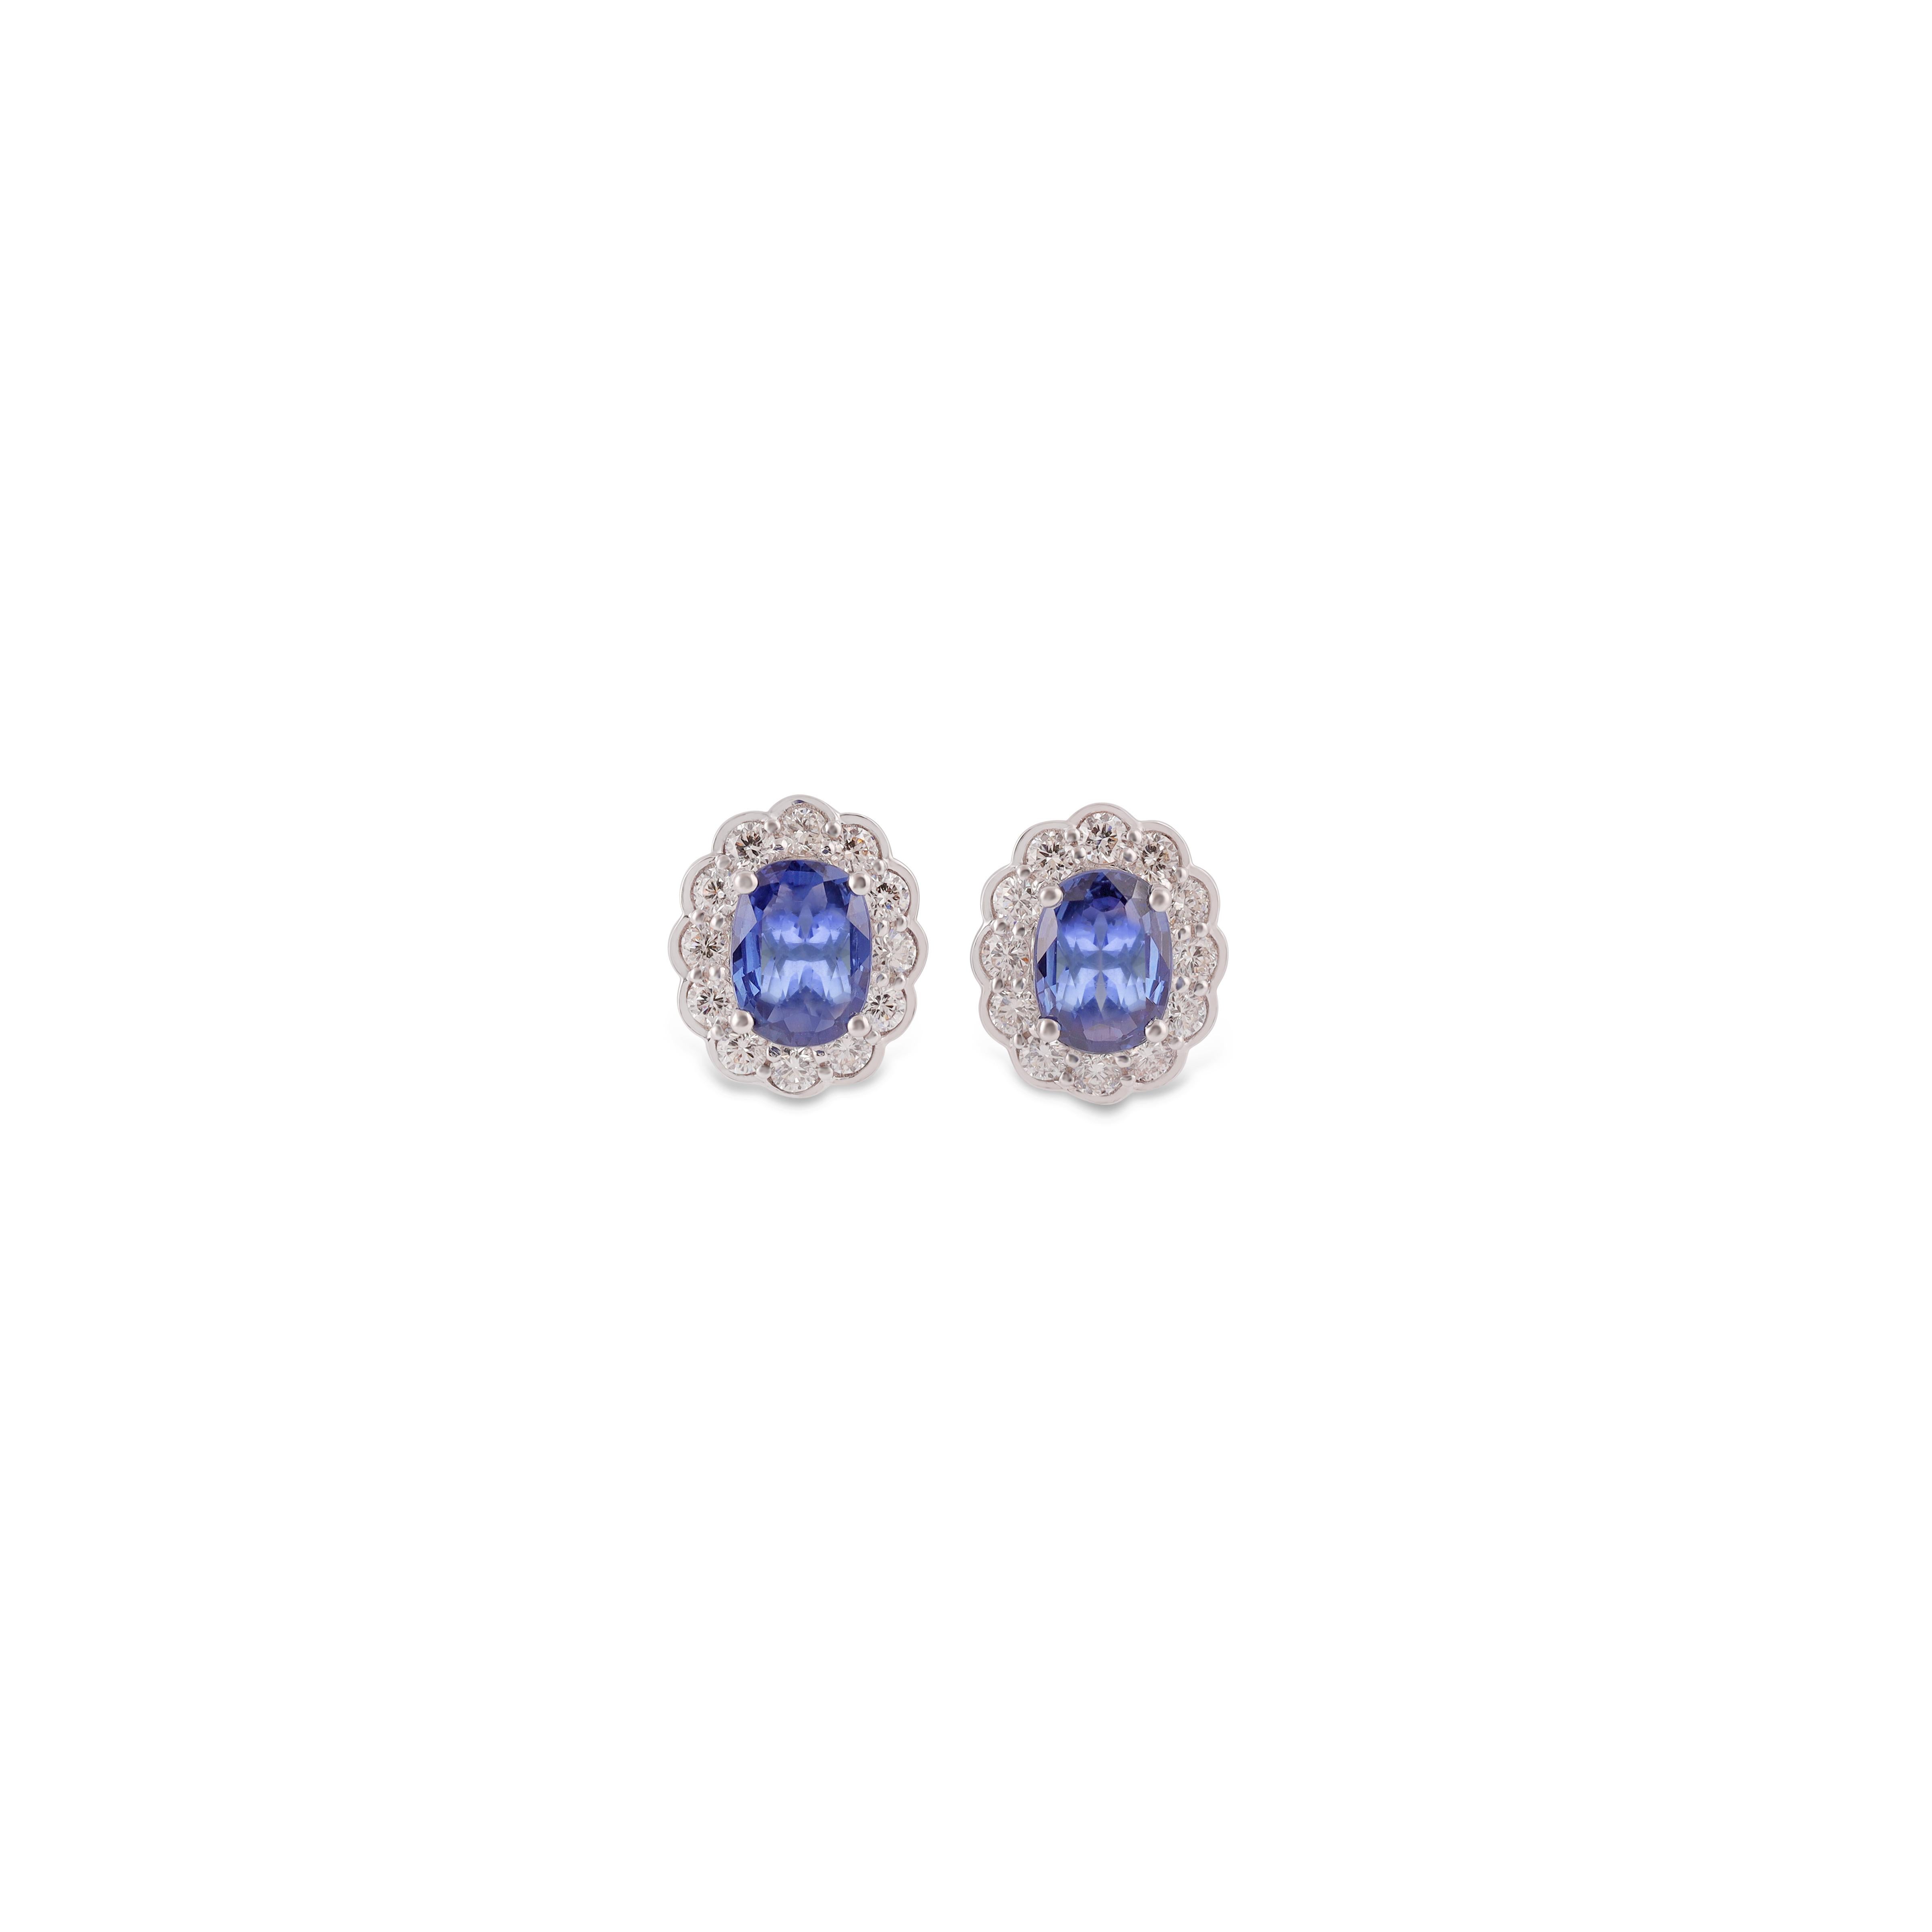 Oval Cut 1.71  Carat Blue Sapphire & Diamond Earrings Studs in 18k White Gold . For Sale